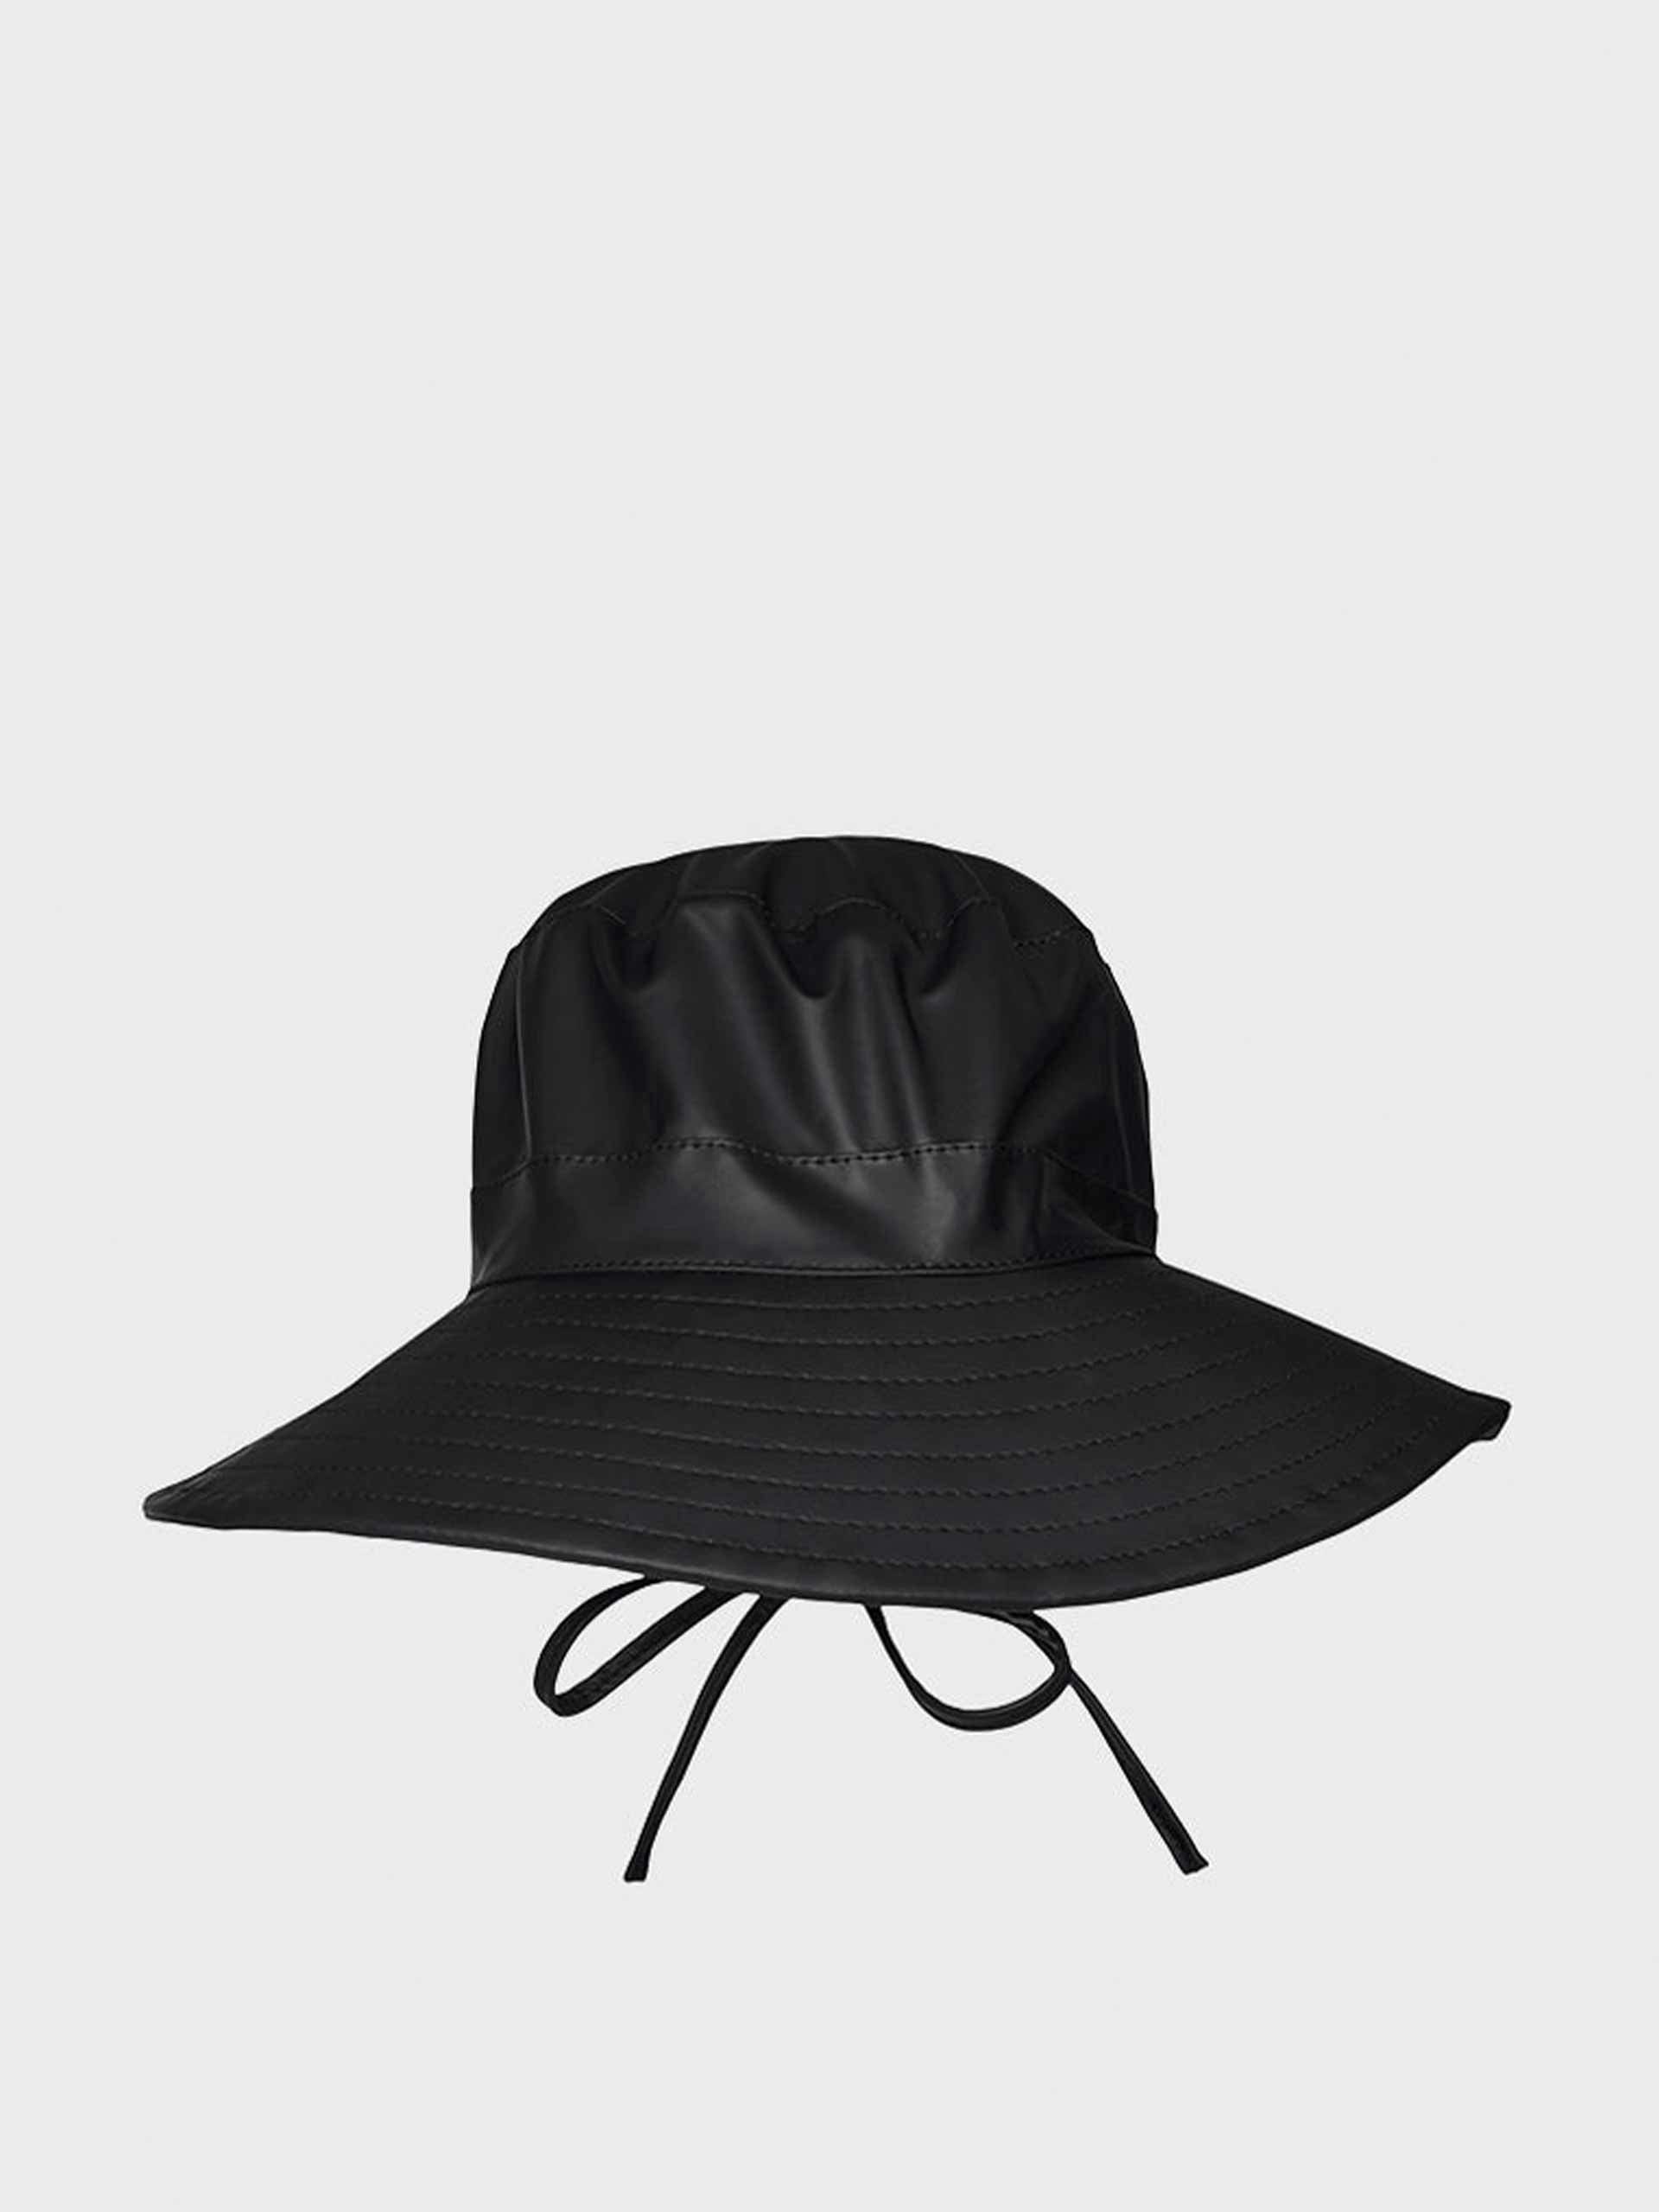 Black waterproof rain hat